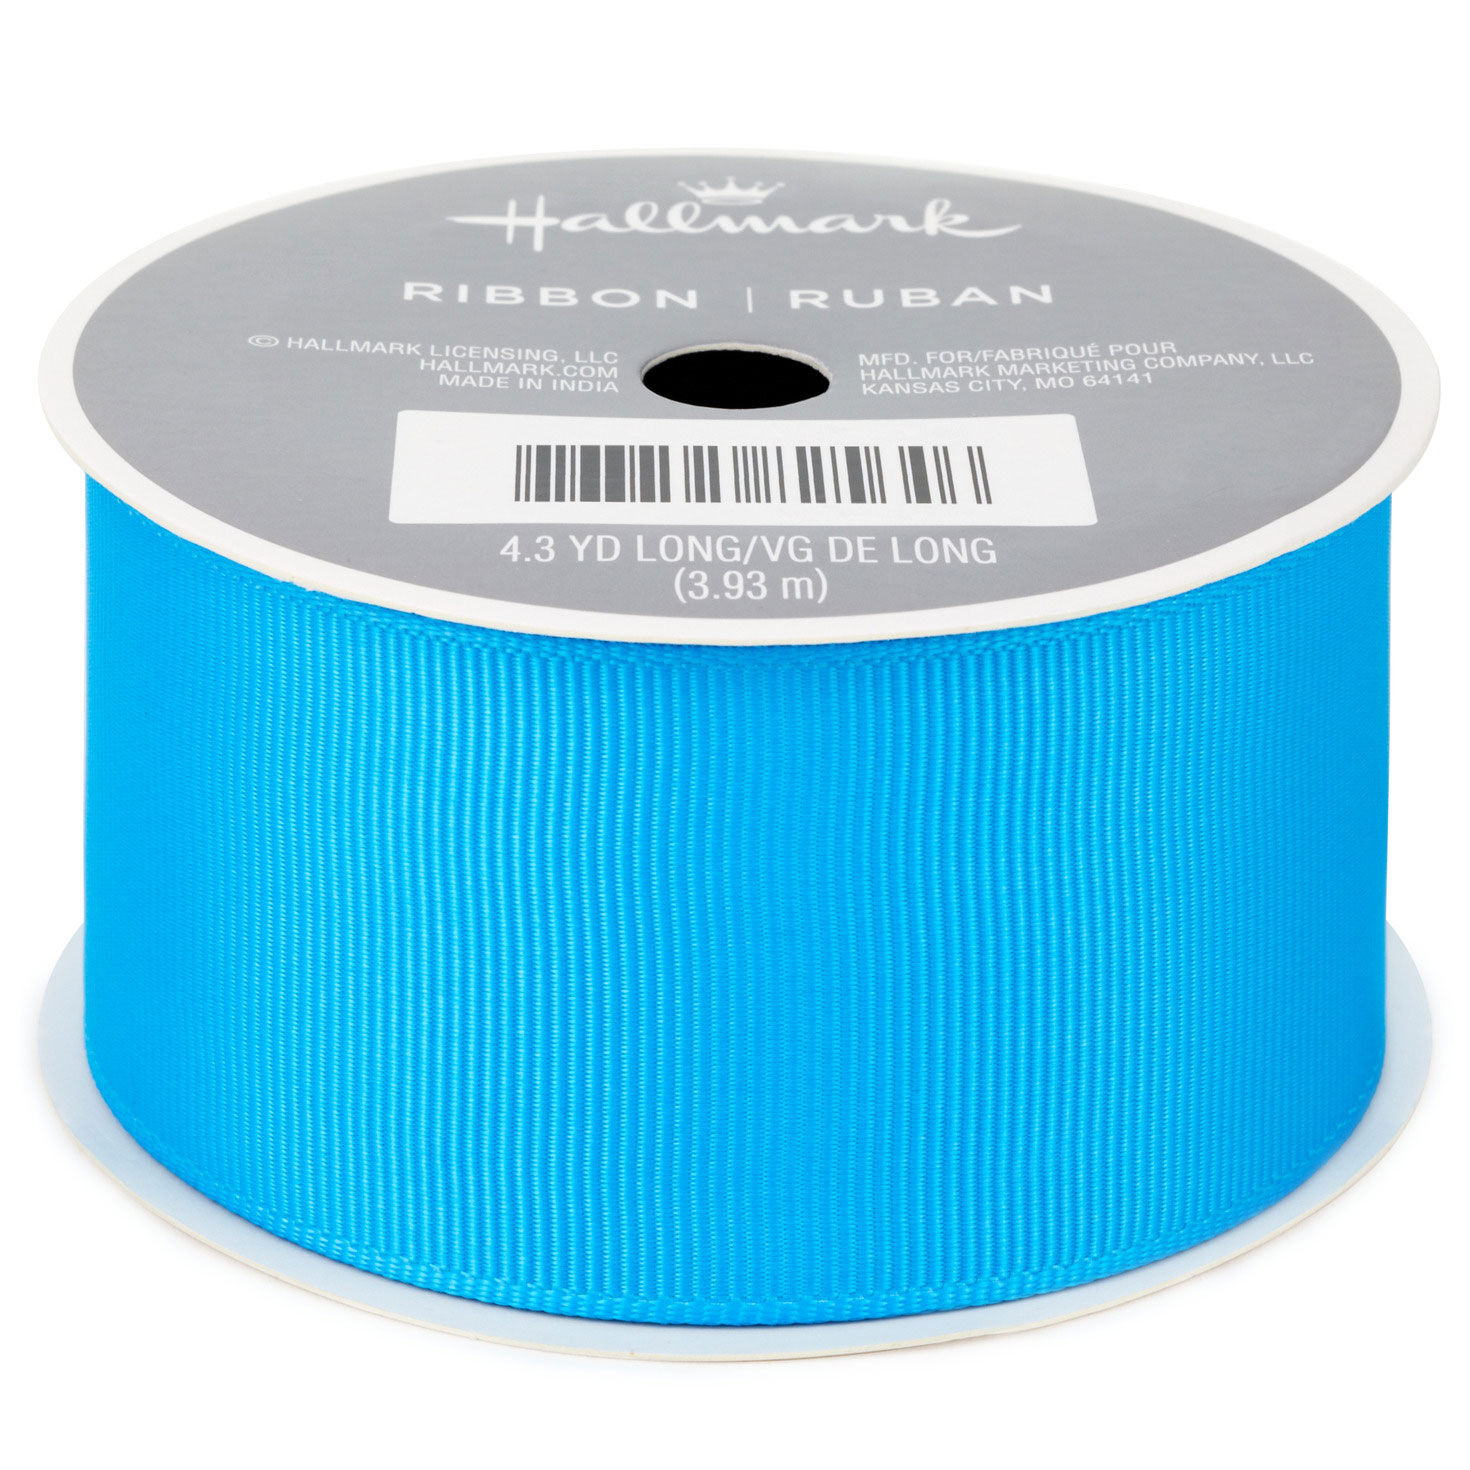 1.5" Bright Blue Grosgrain Ribbon, 12.9' for only USD 4.99 | Hallmark